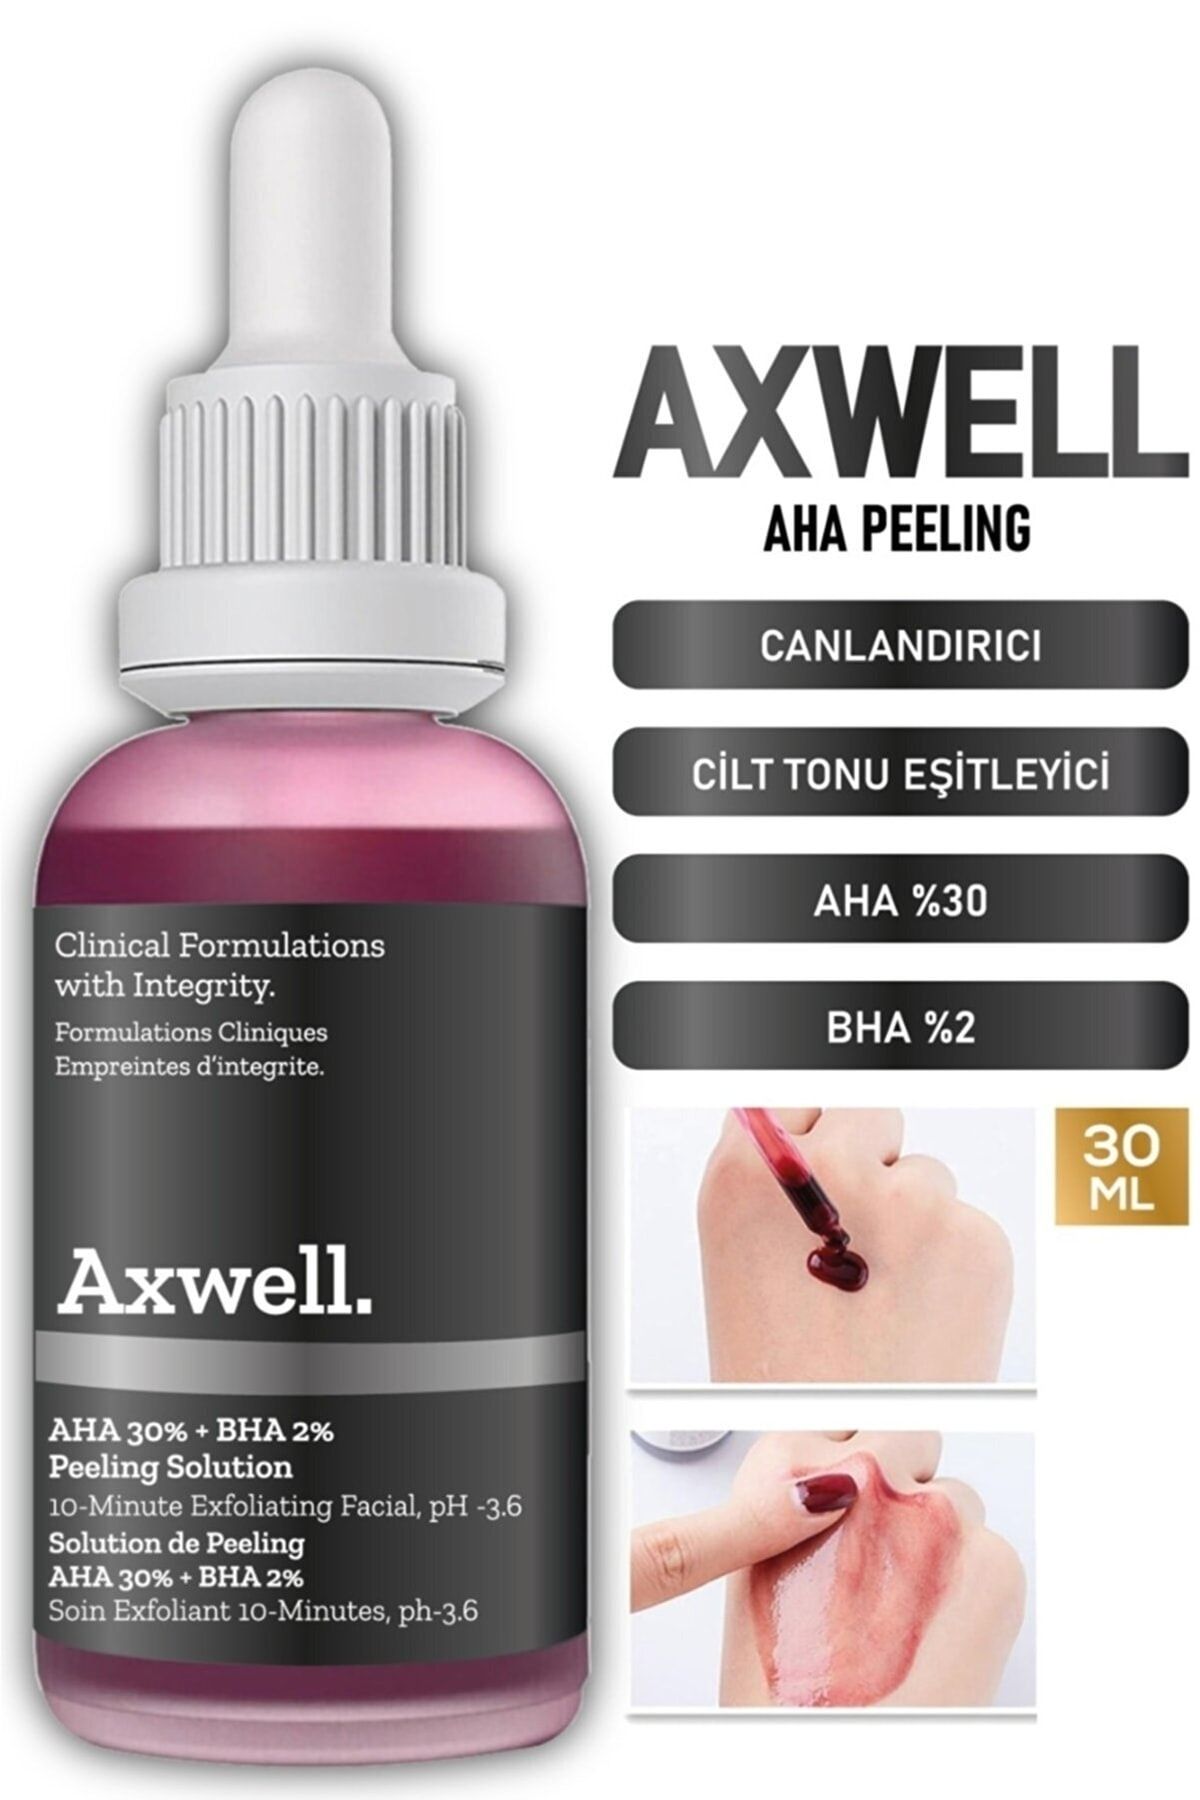 AXWELL Canlandırıcı & Cilt Tonu Eşitleyici Yüz Peeling Serum 30 Ml Aha 30% + Bha 2%